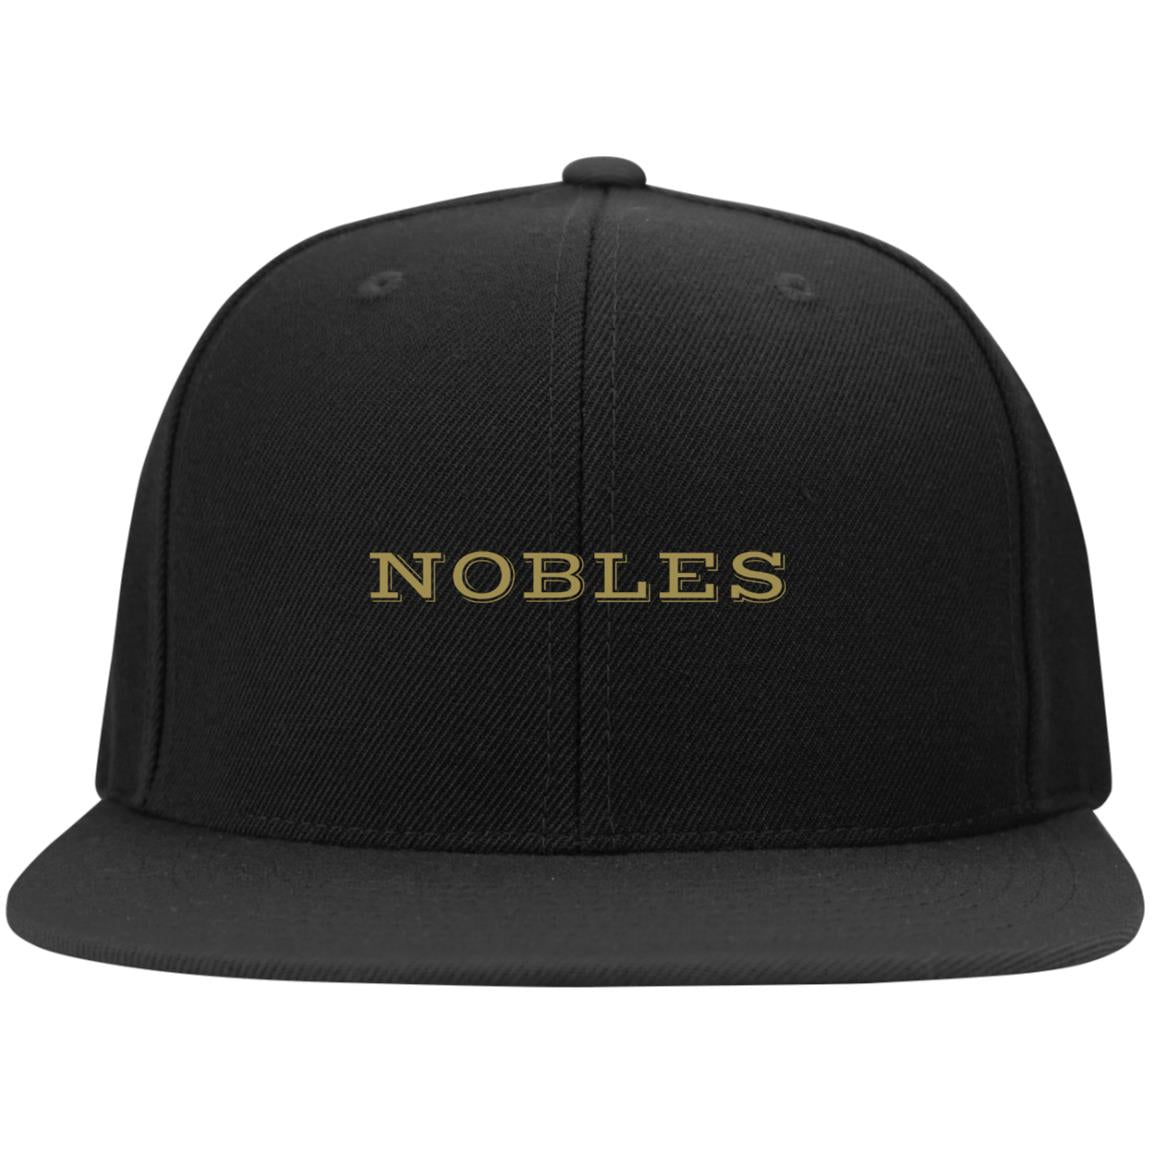 Nobles Snapback Hat